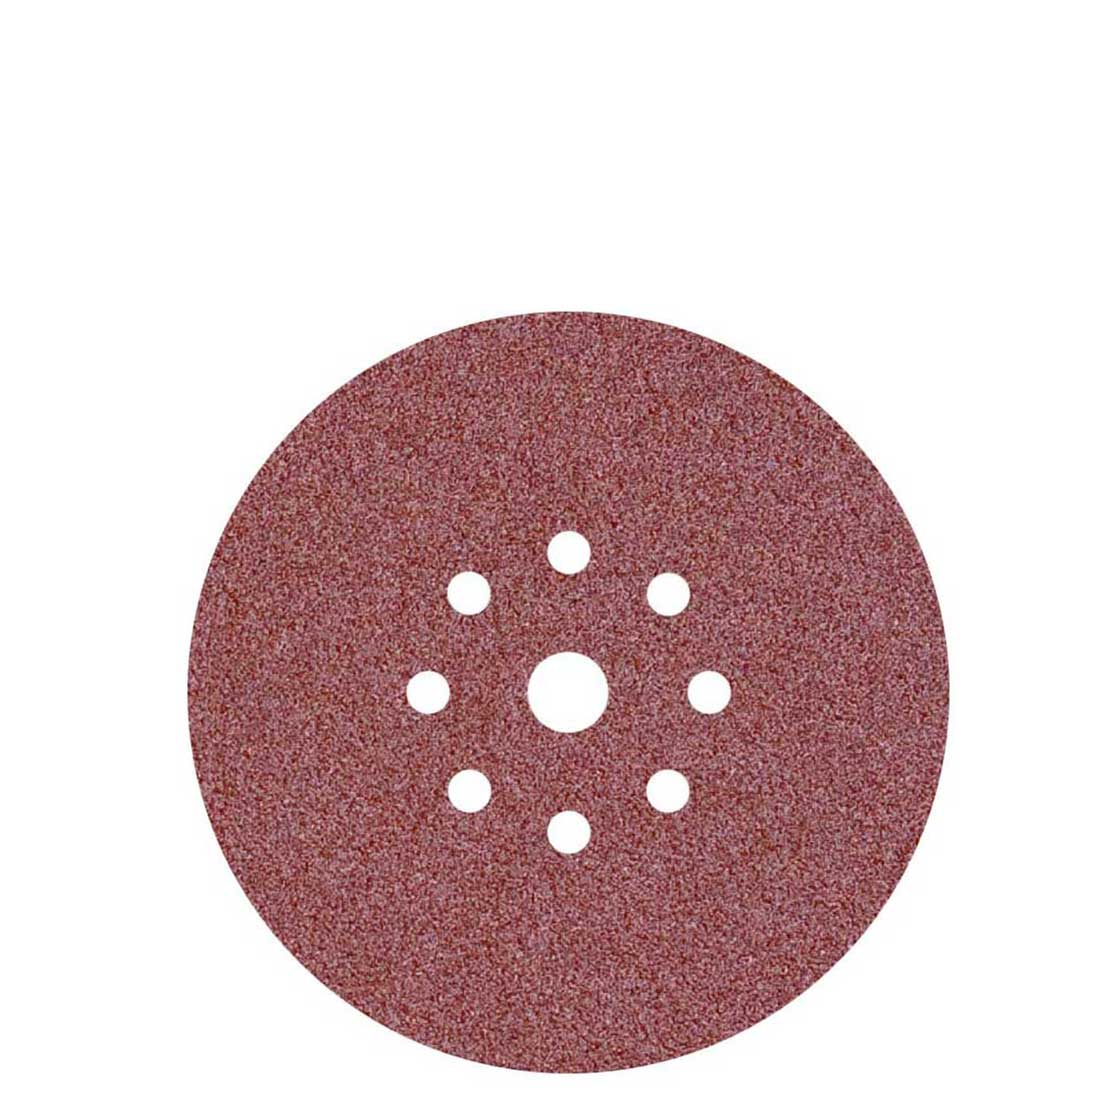 MioTools hook & loop sanding discs for drywall sanders, G16–240, Ø 225 mm / 9 hole / aluminium oxide